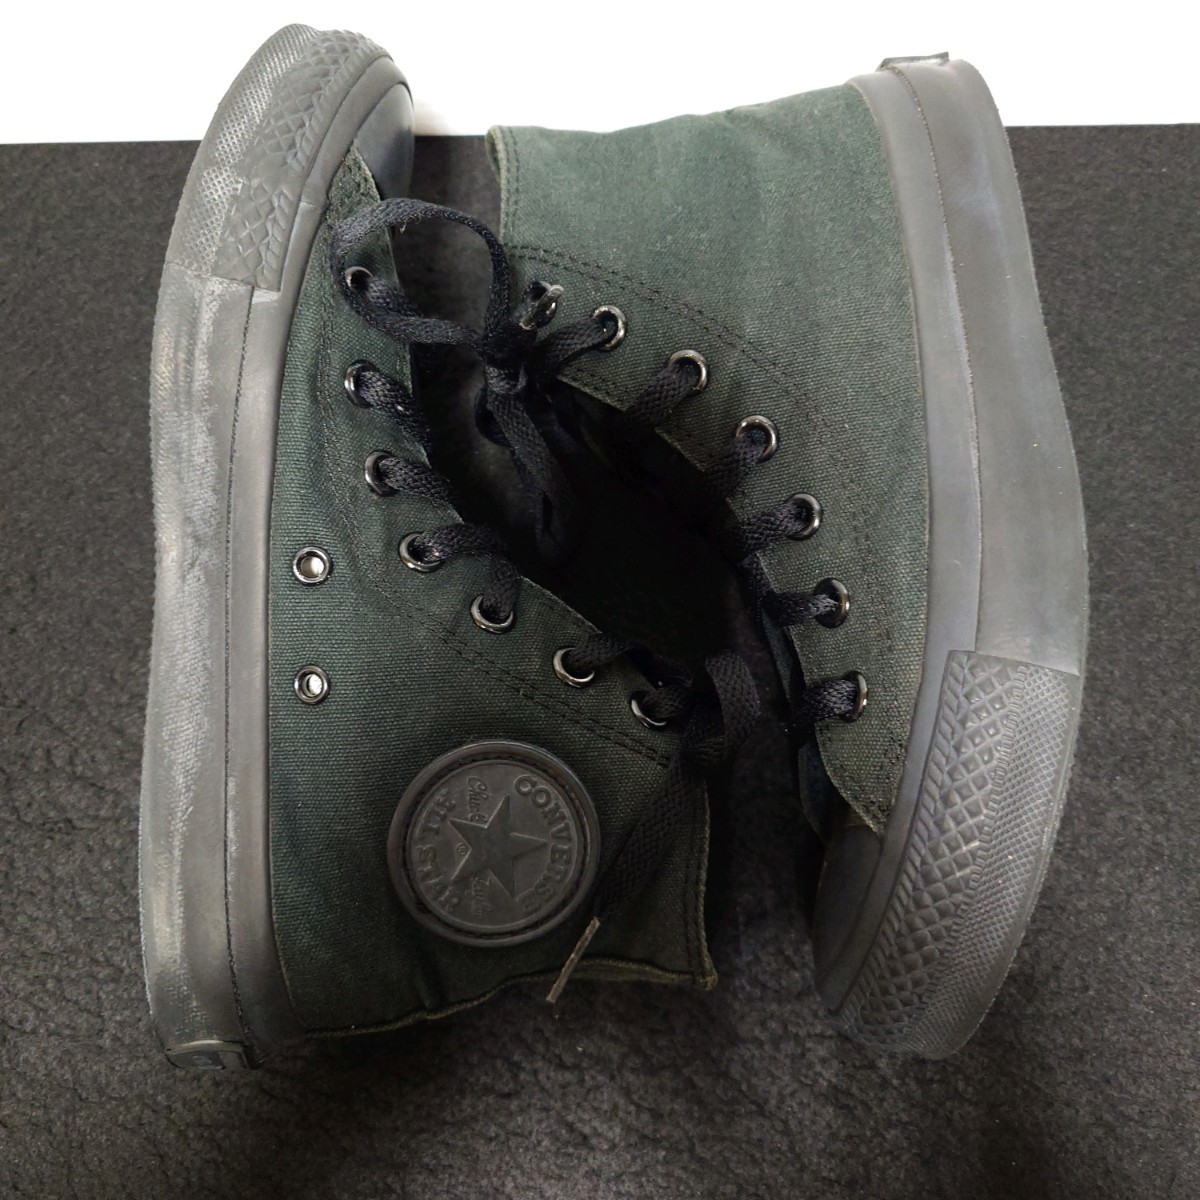 converseALLSTAR コンバースオールスター キャンバス ハイカット スニーカー 靴 23.5cm レディース ブラック 黒_画像3